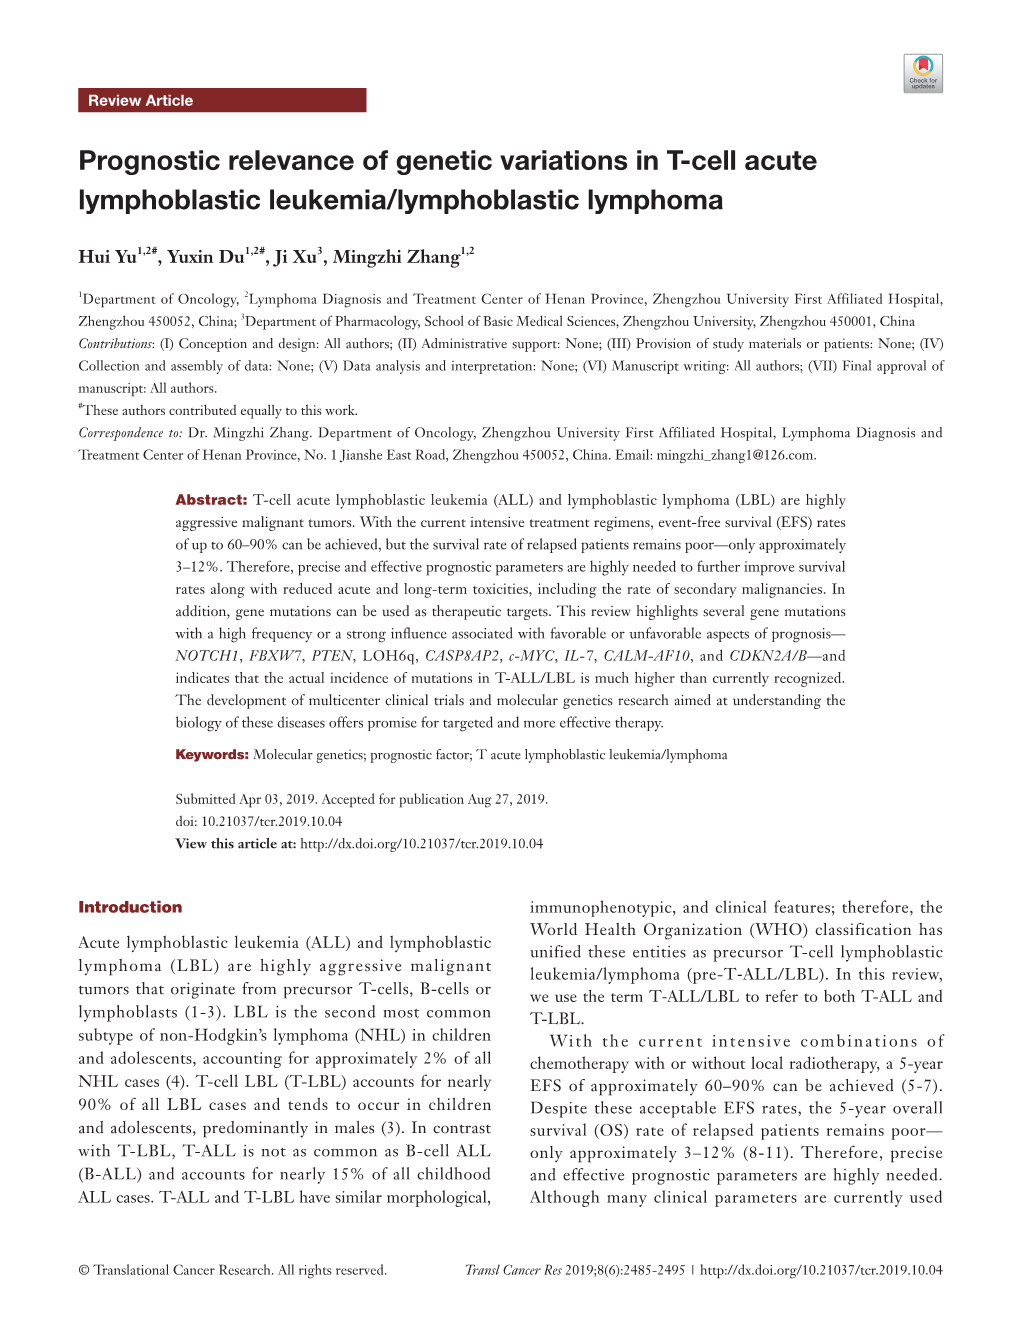 Prognostic Relevance of Genetic Variations in T-Cell Acute Lymphoblastic Leukemia/Lymphoblastic Lymphoma